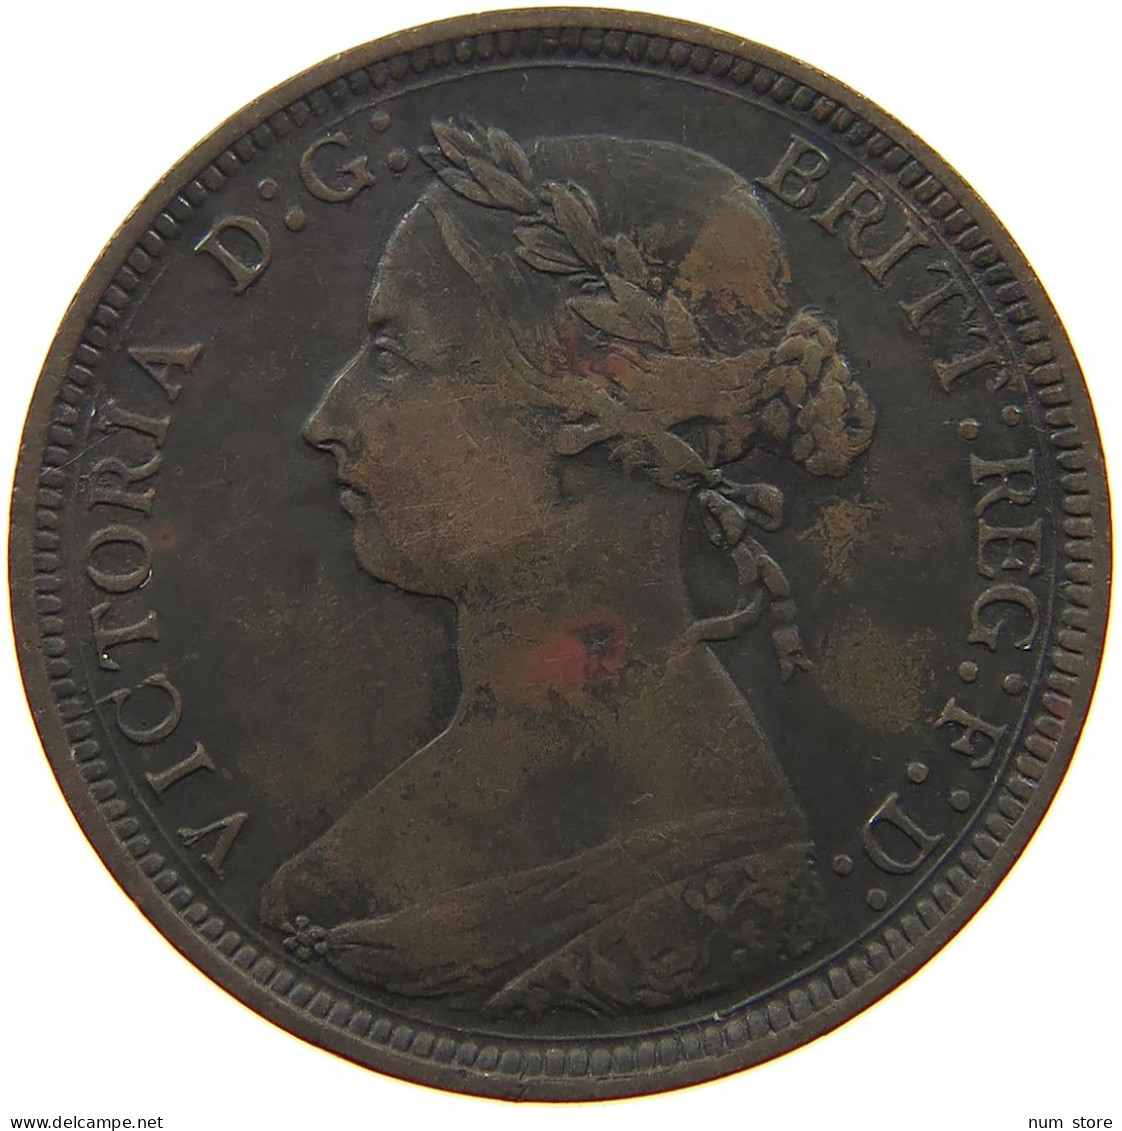 GREAT BRITAIN HALFPENNY 1887 Victoria 1837-1901 #a010 0455 - C. 1/2 Penny